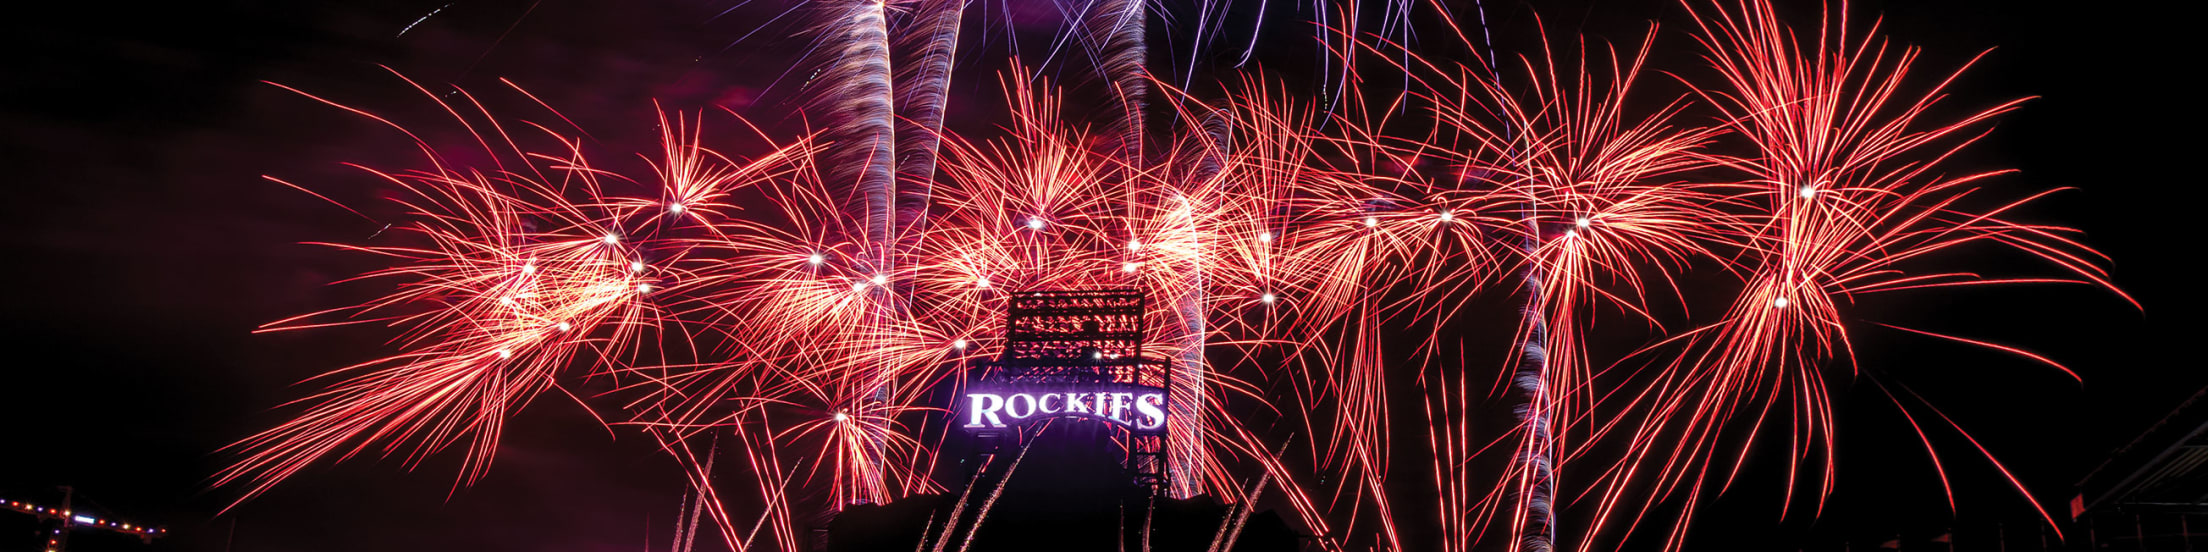 Summer Fireworks Games Colorado Rockies